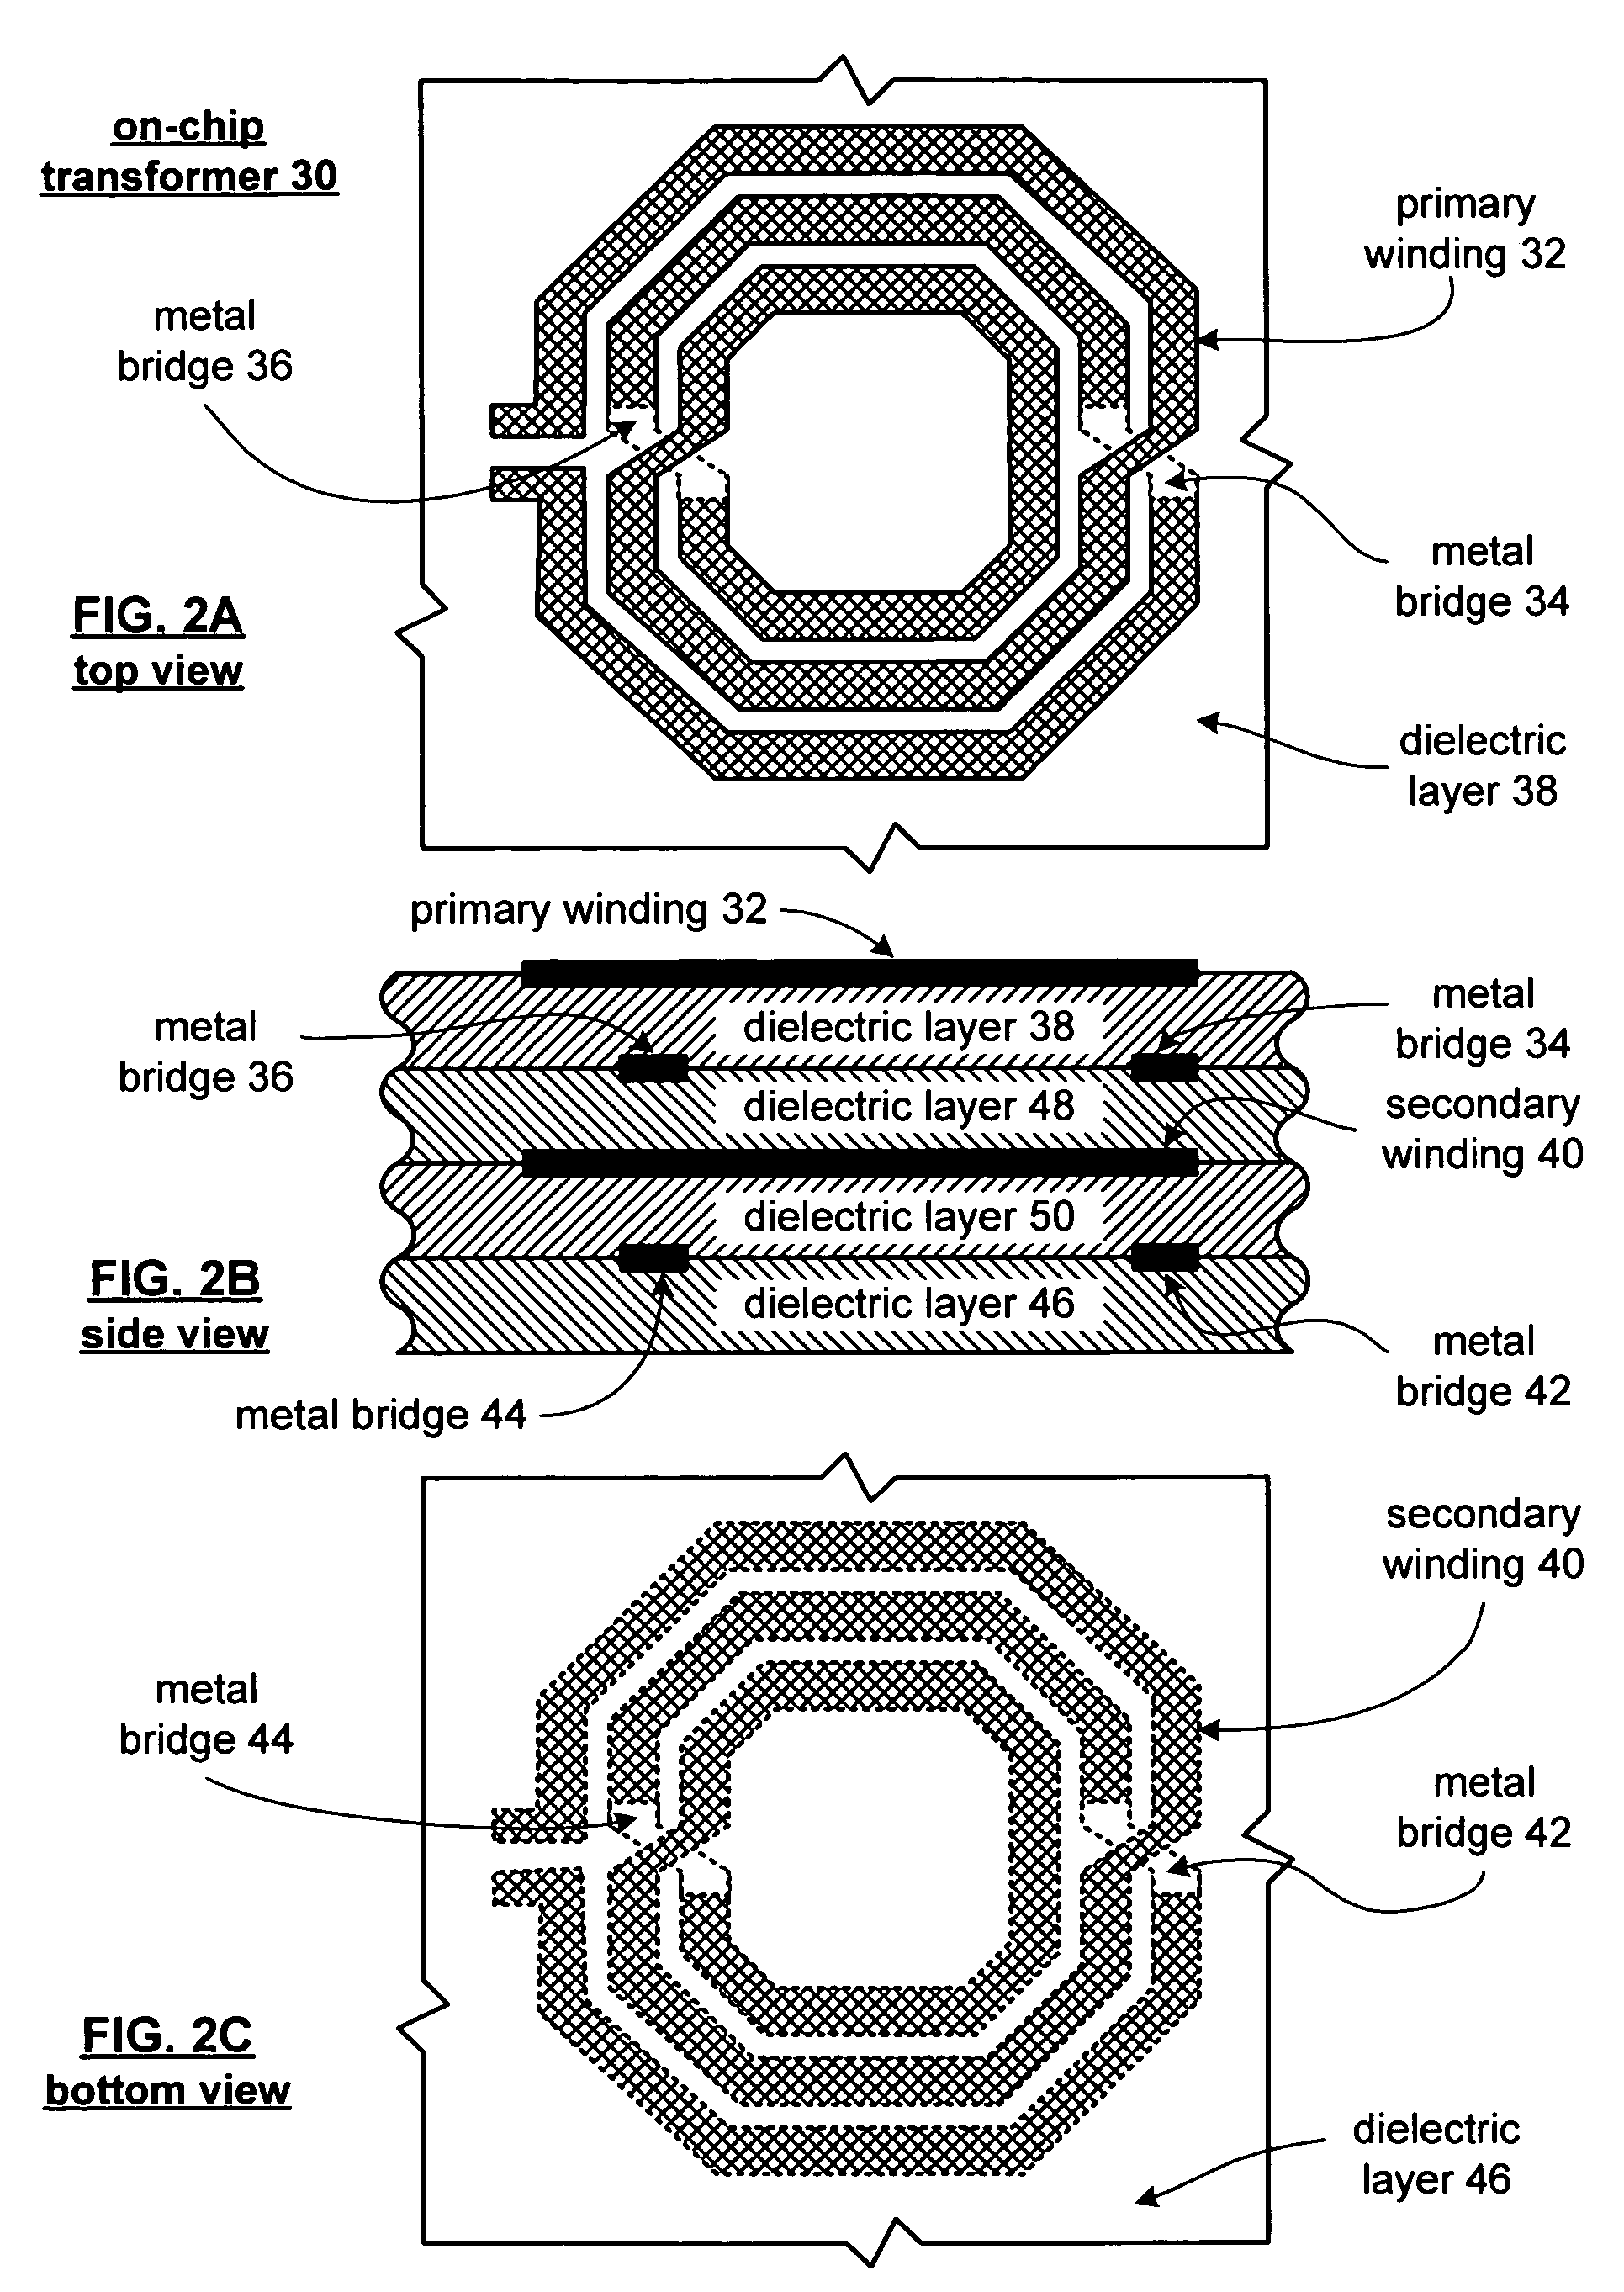 Method of manufacturing an on-chip transformer balun